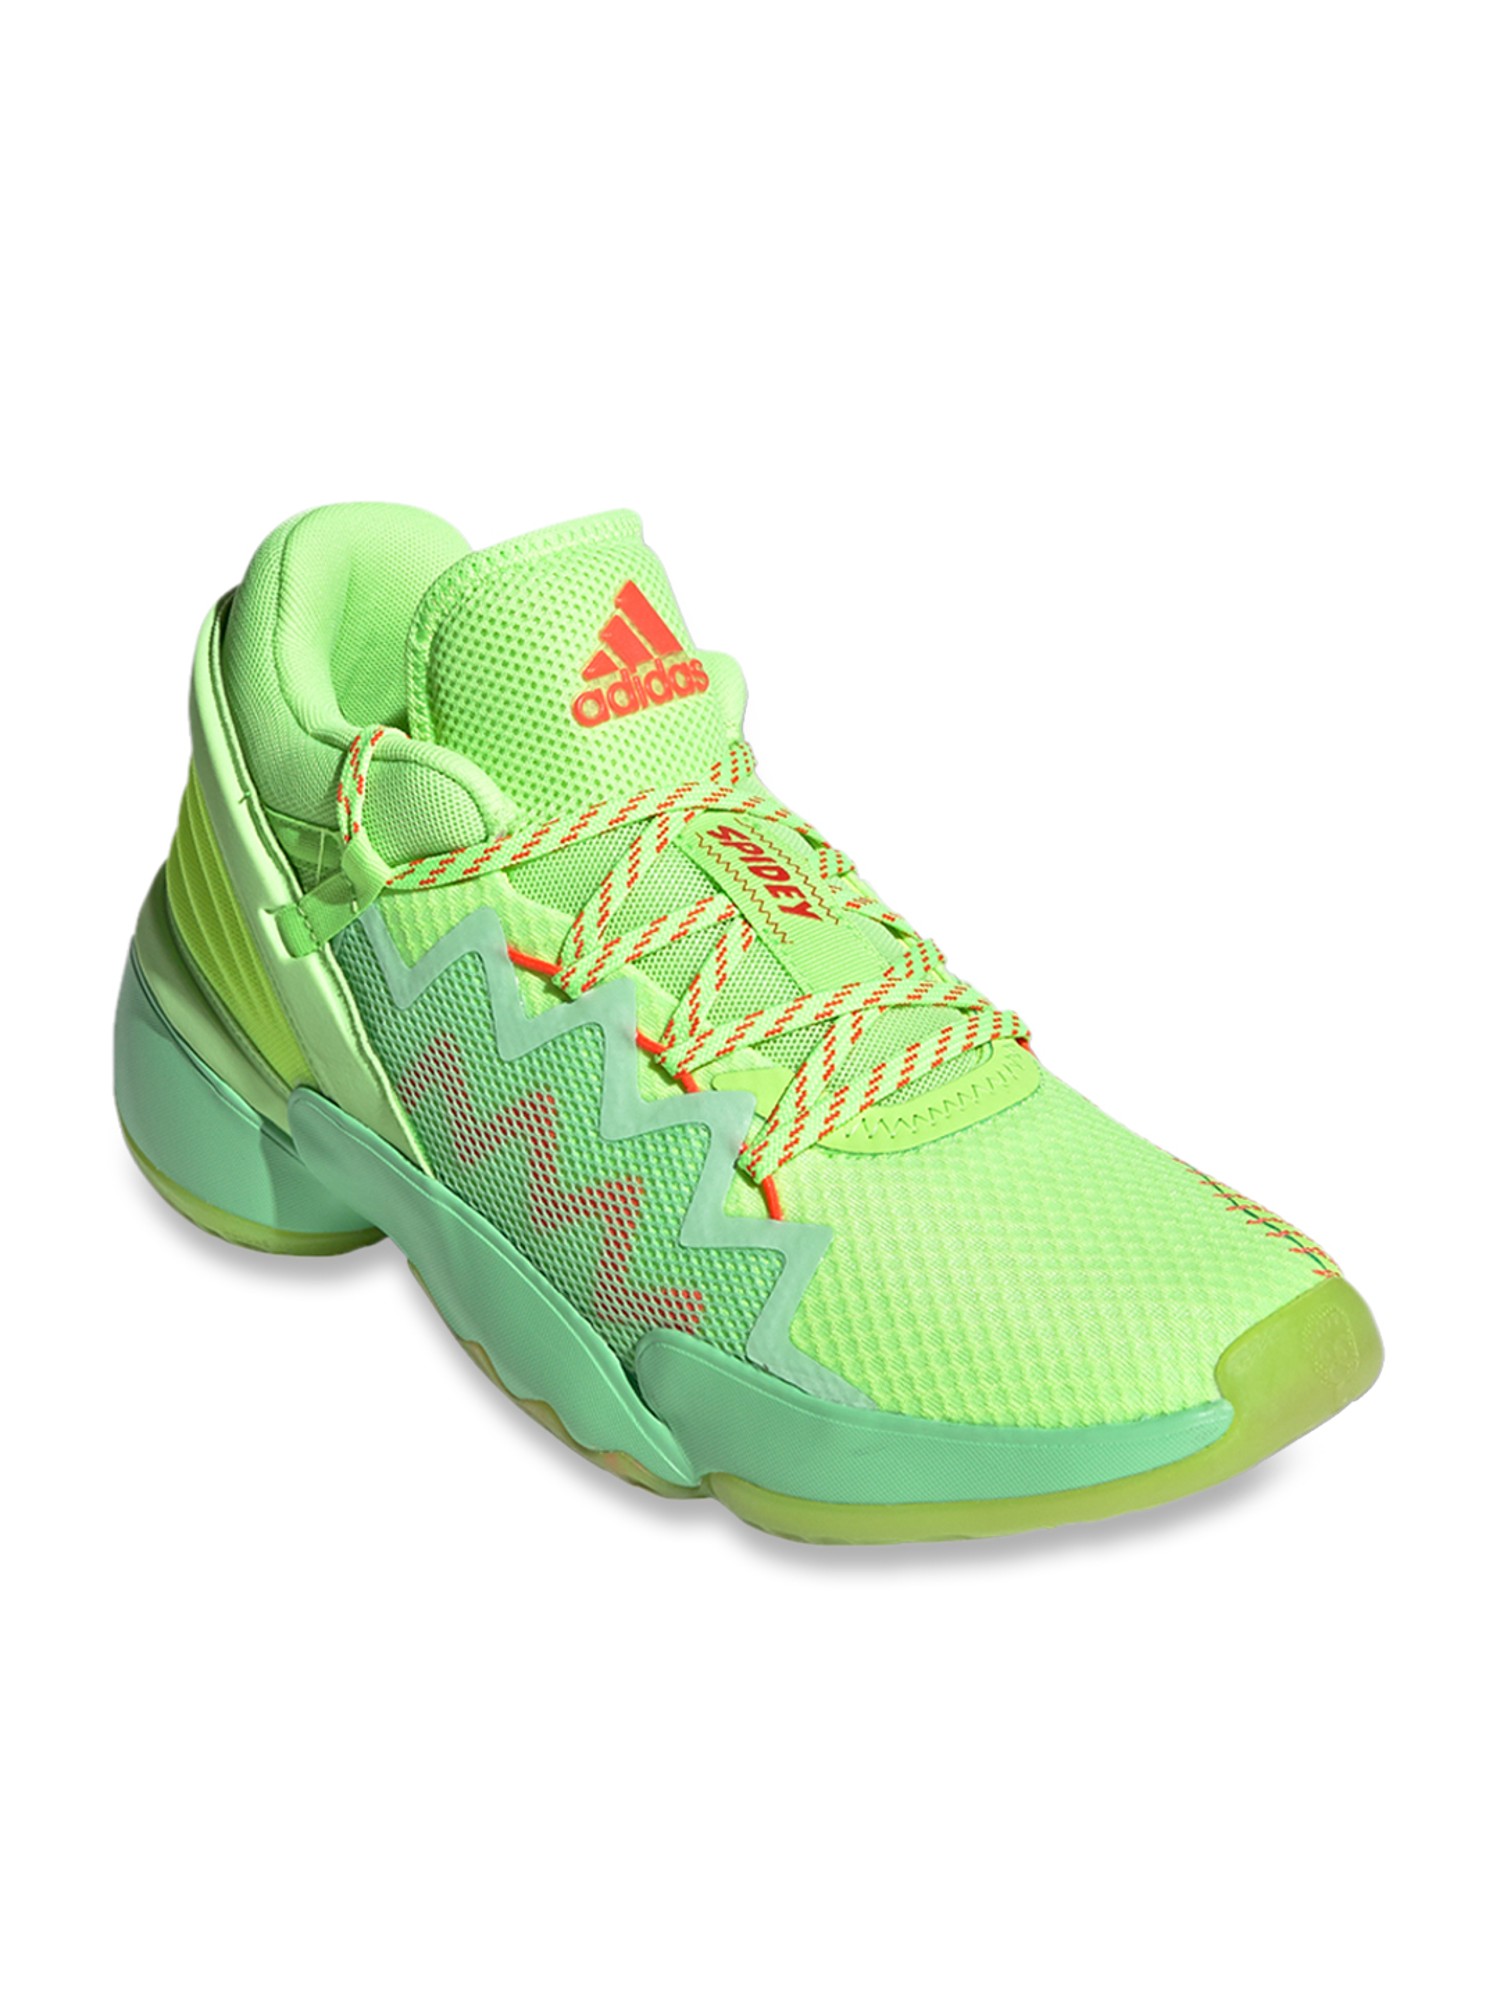 green basketball sneakers